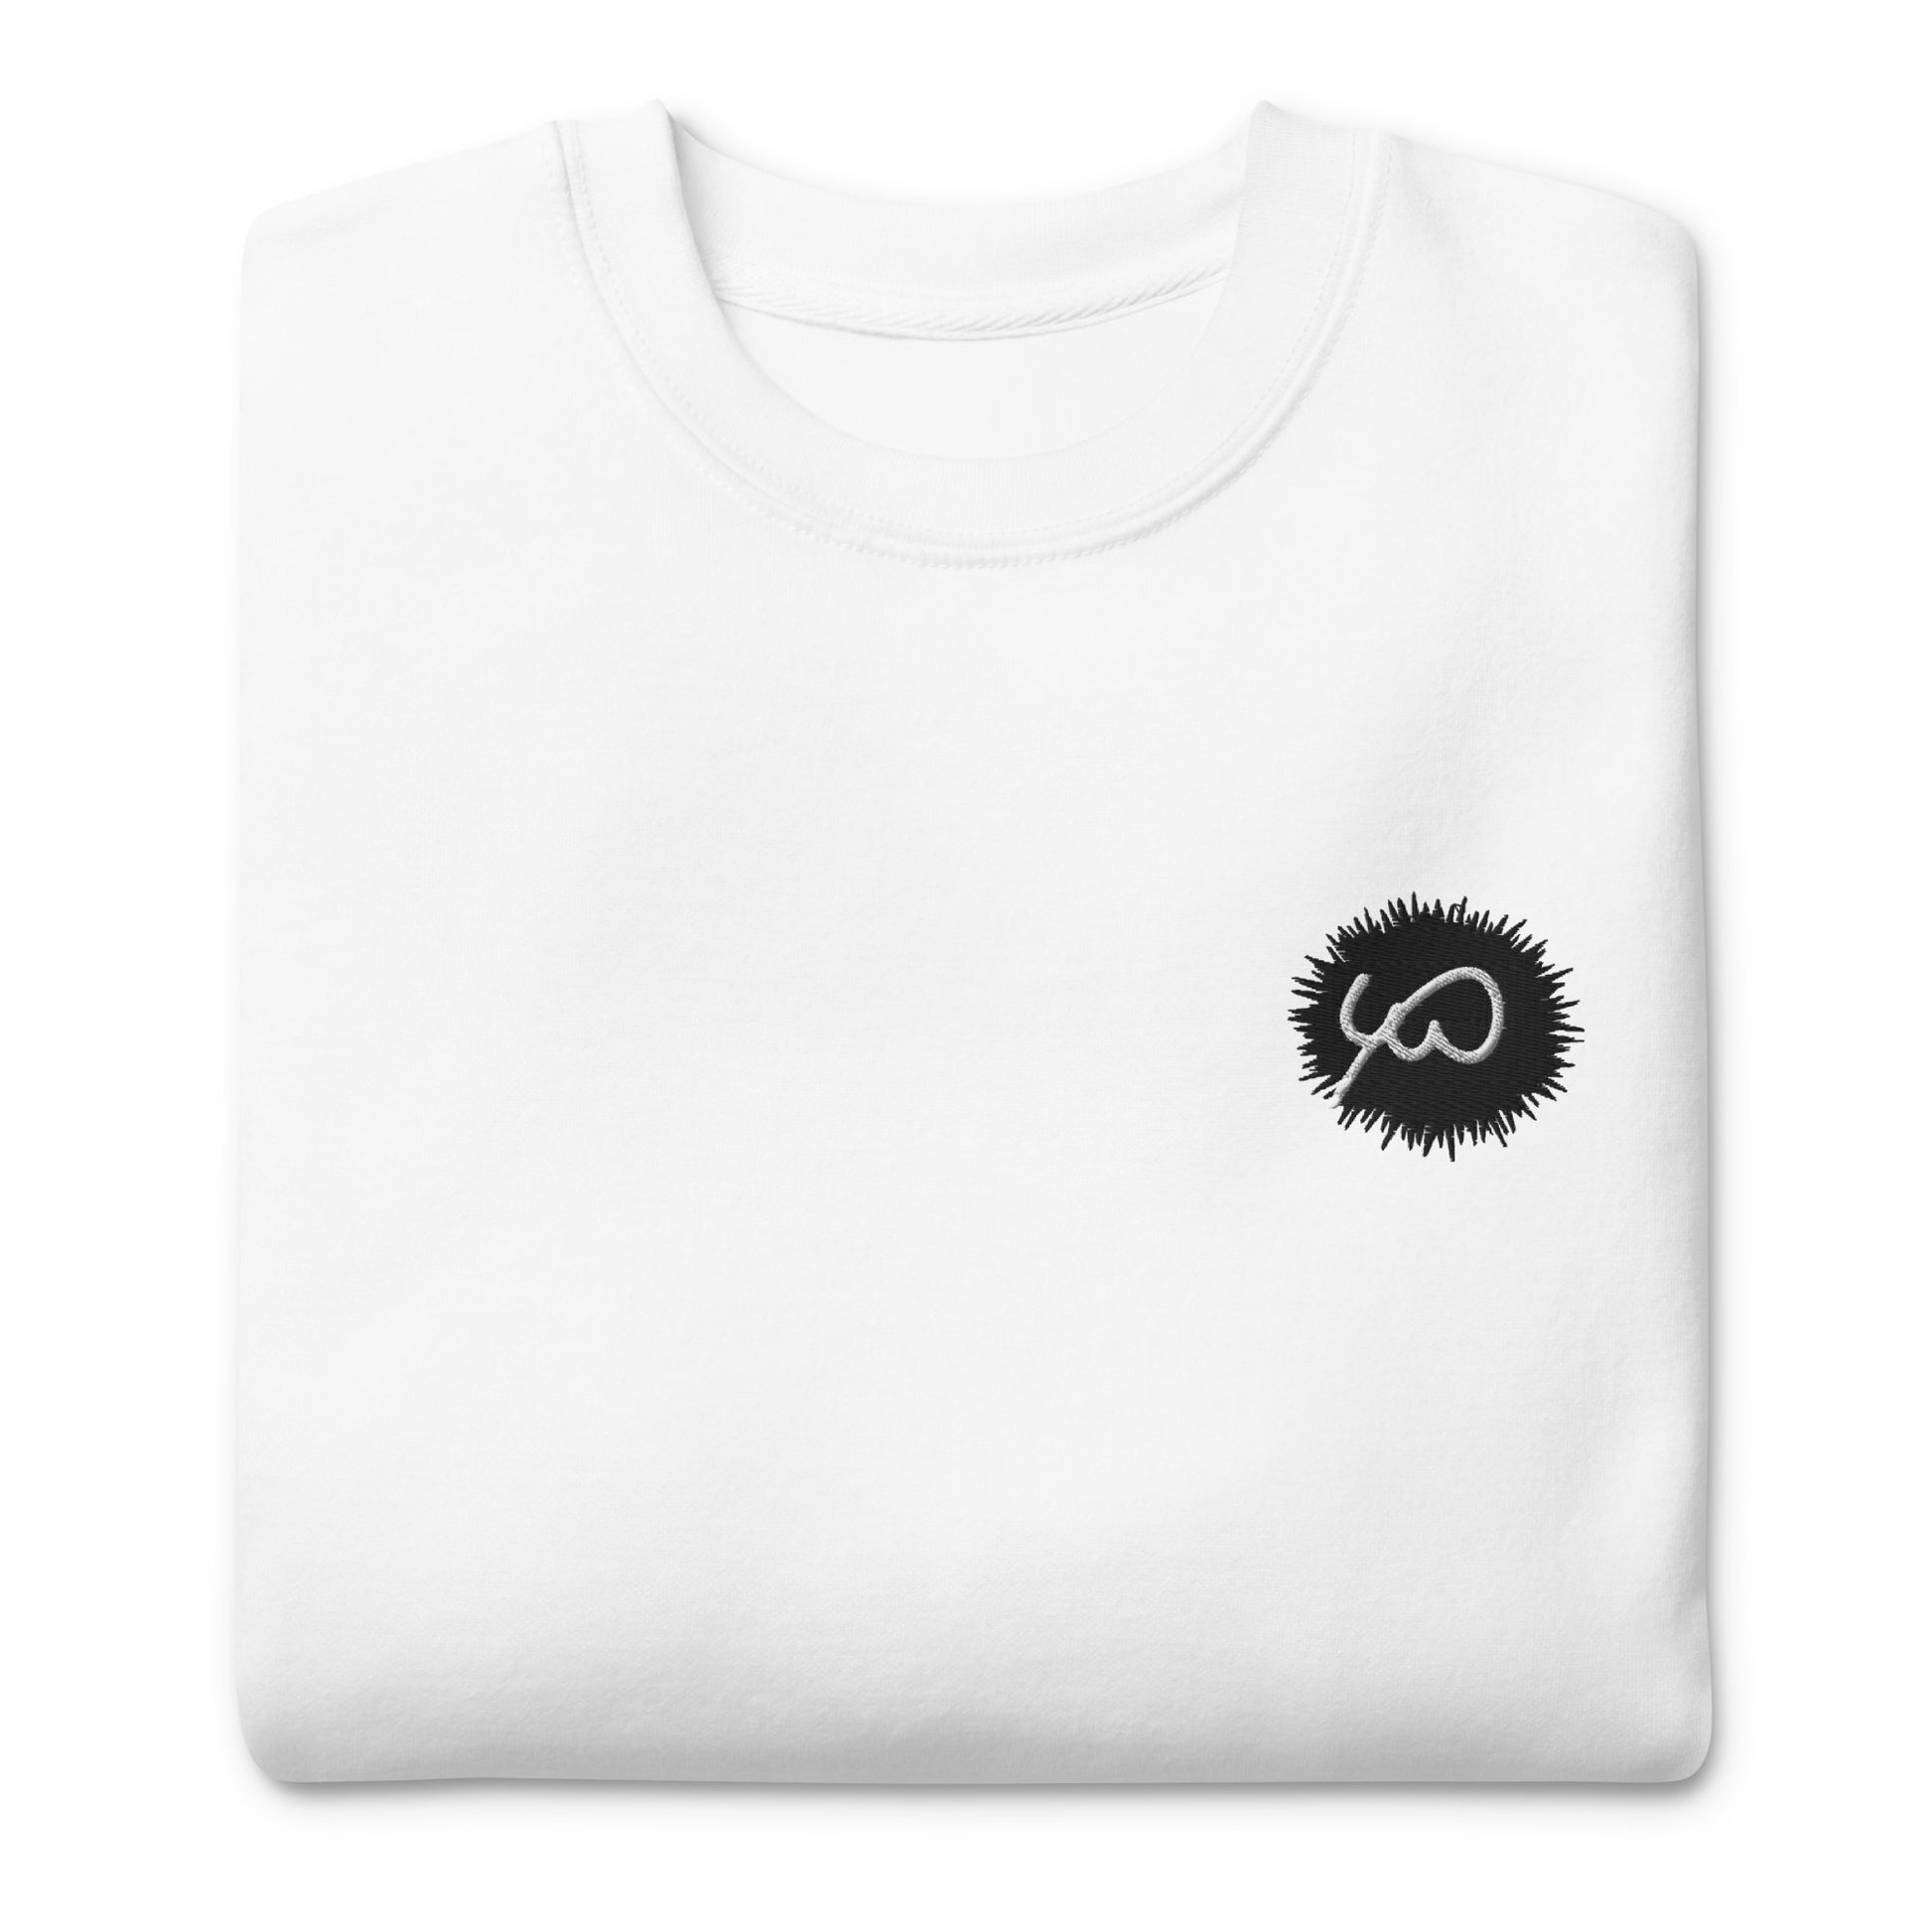 White Unisex Premium Sweatshirt -Front design with Black and White Embroidery of Uniwari Logo